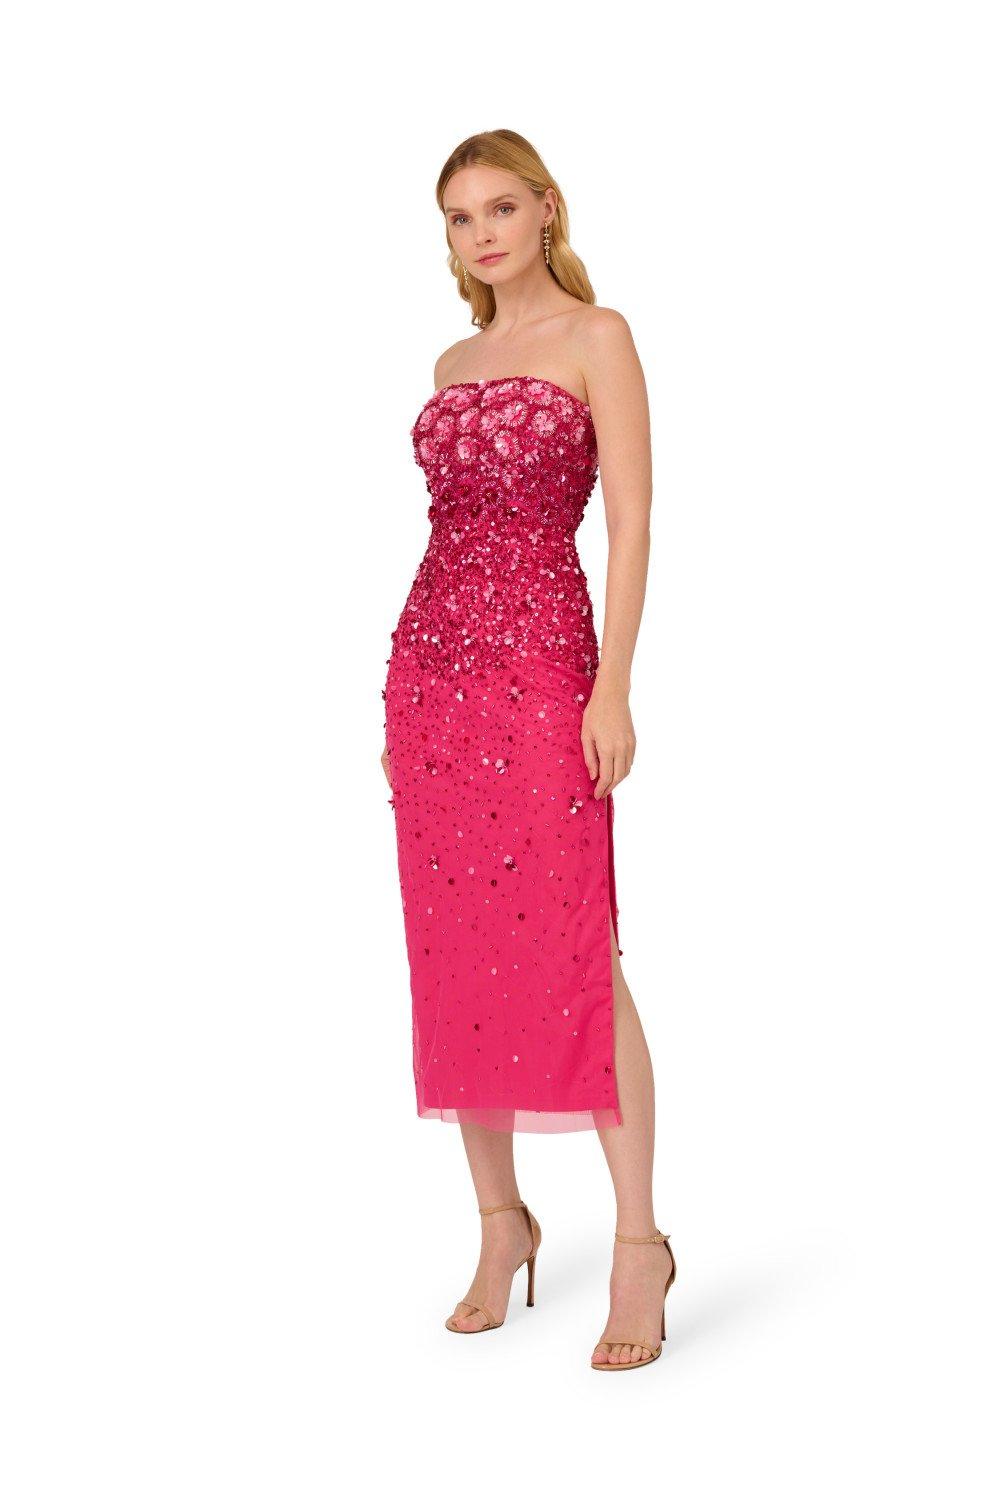 Расшитое бисером платье без бретелек Adrianna Papell, розовый